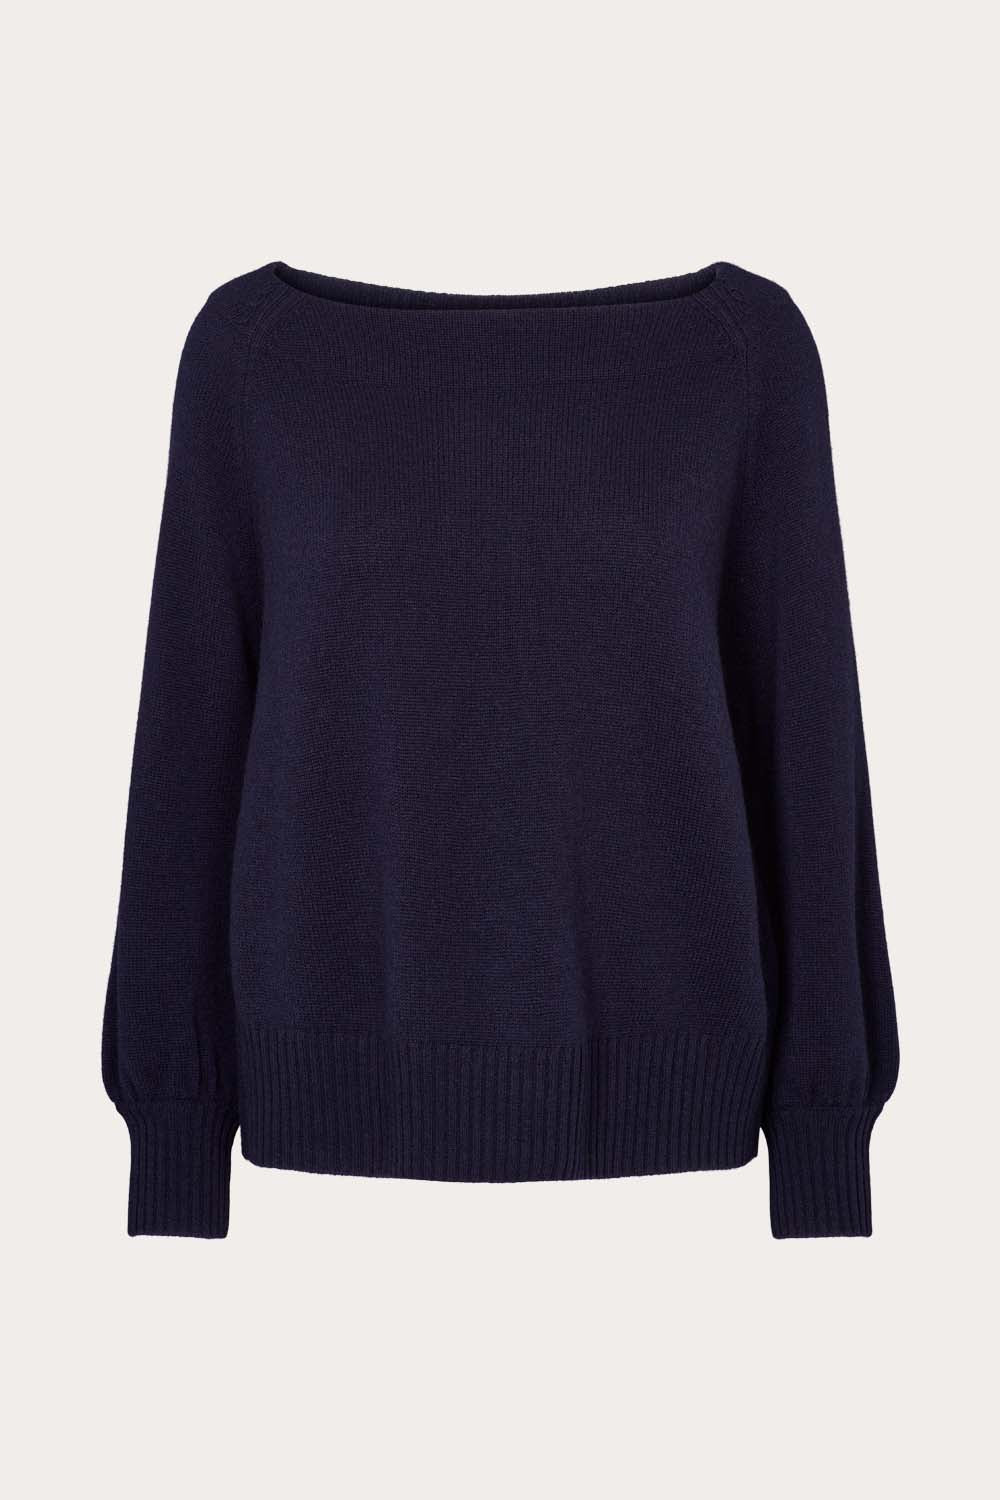 O'TAY Aura Sweater Blouses Navy